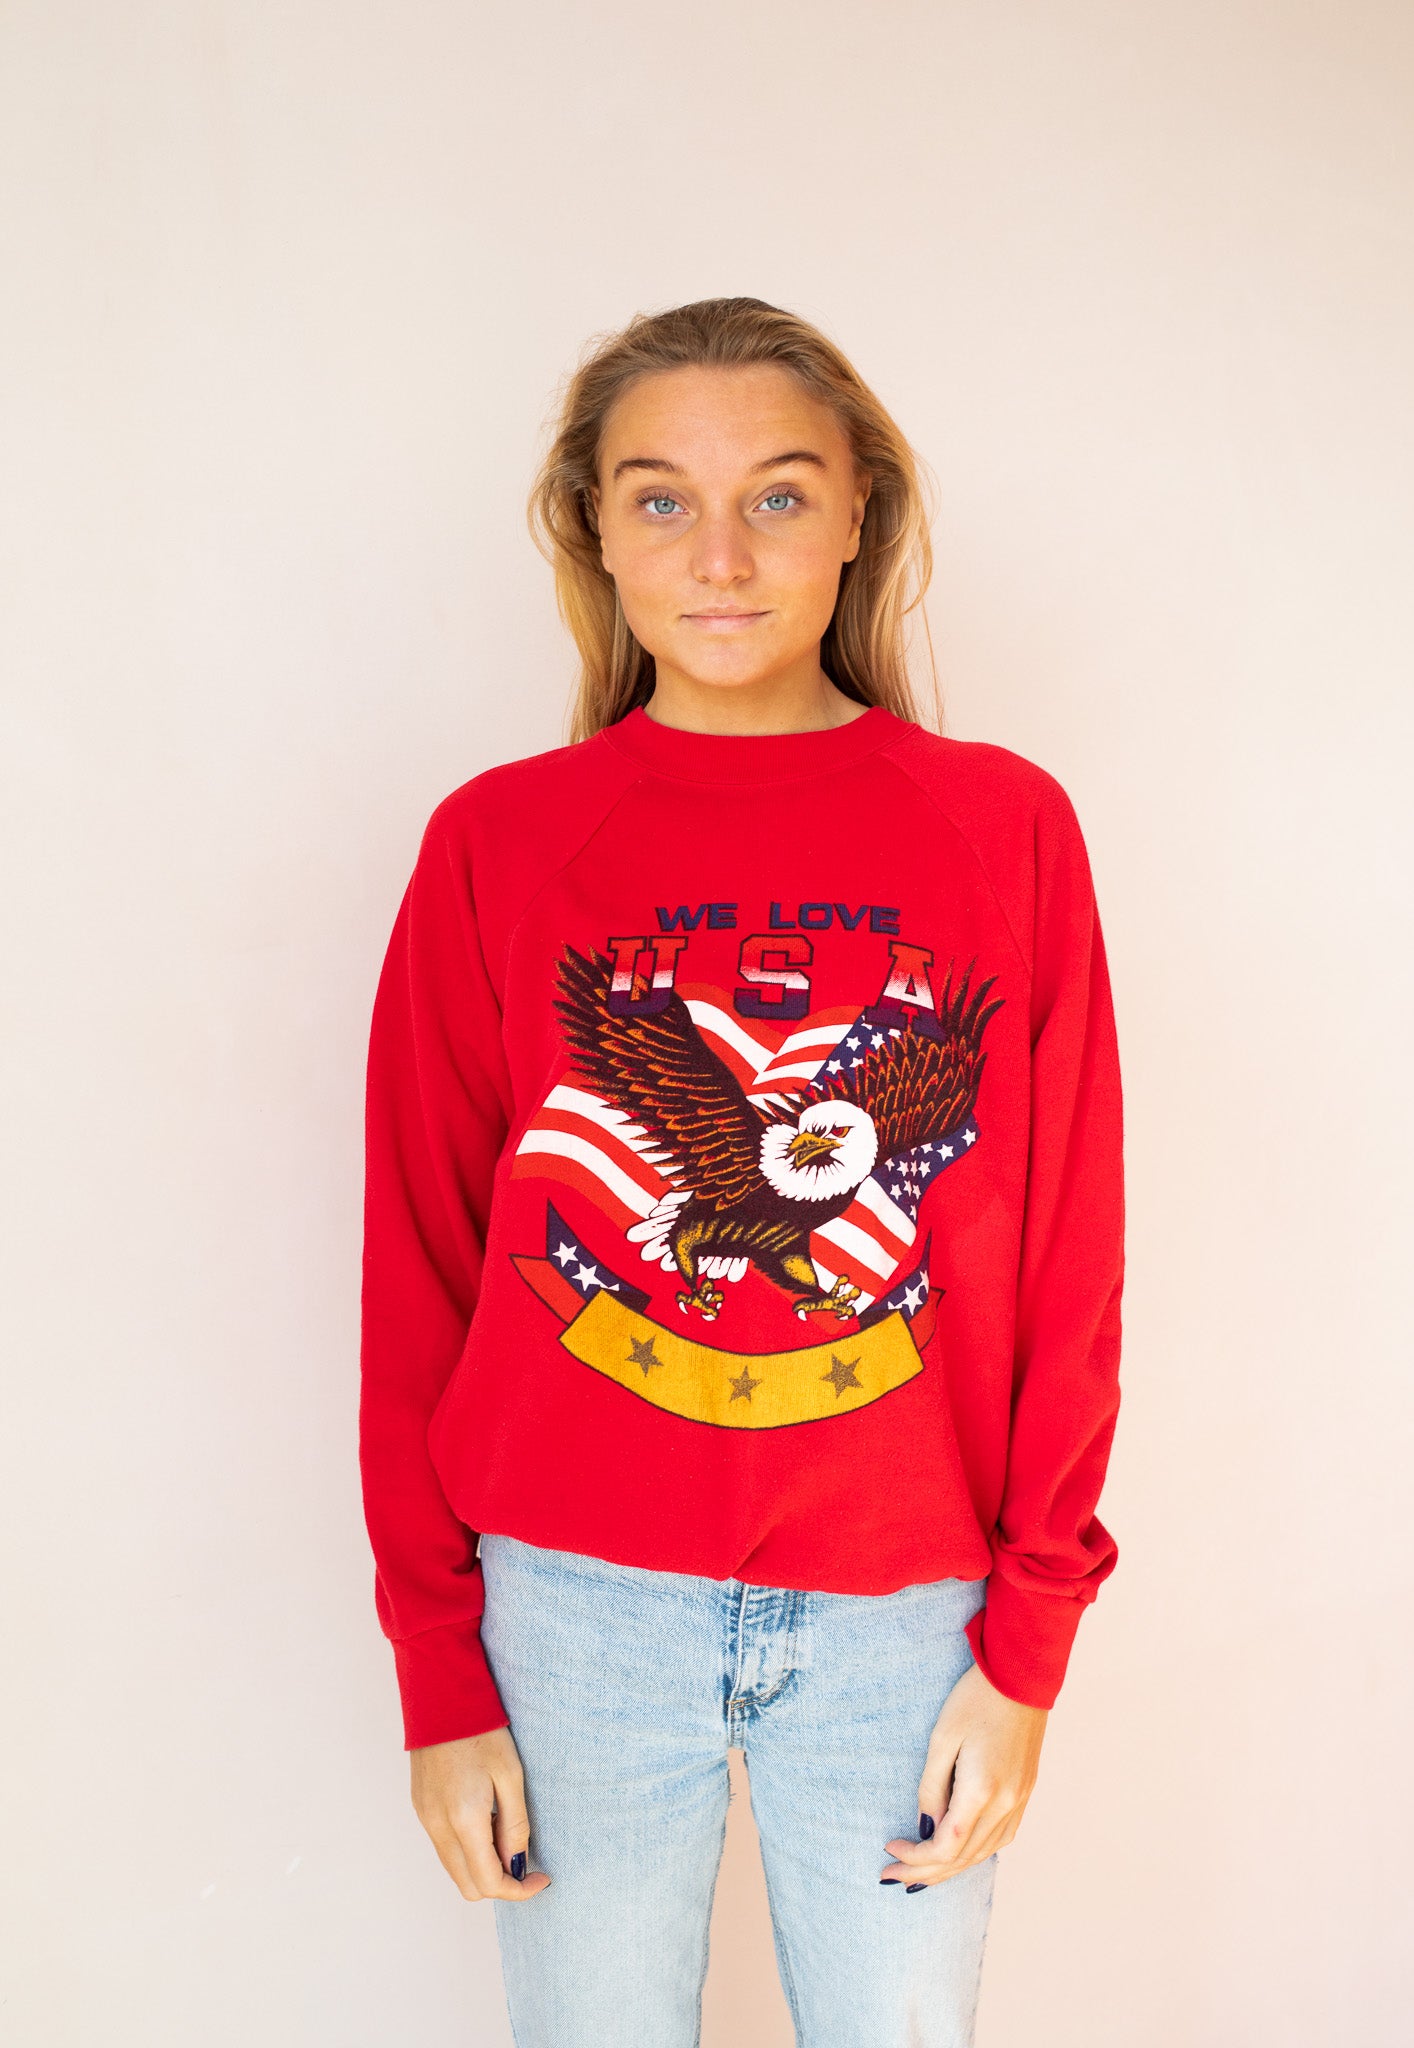 We Love USA - Sweatshirt